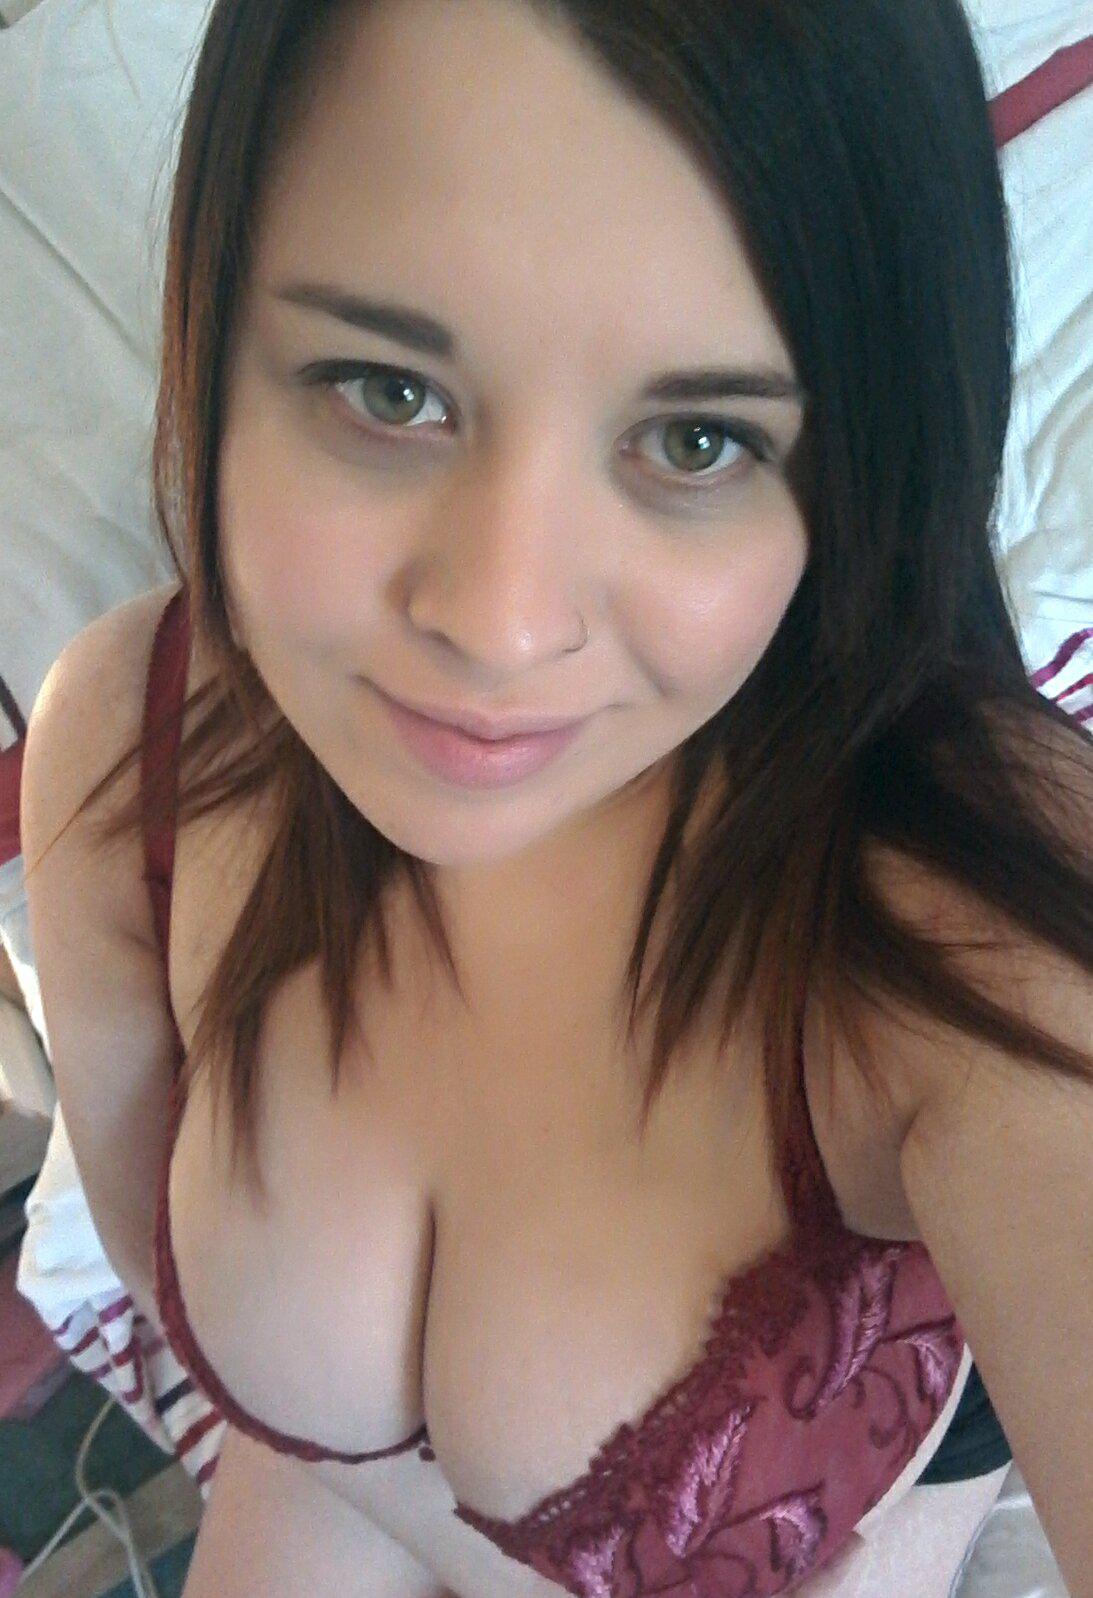 diane st cyr share young boobs selfie photos